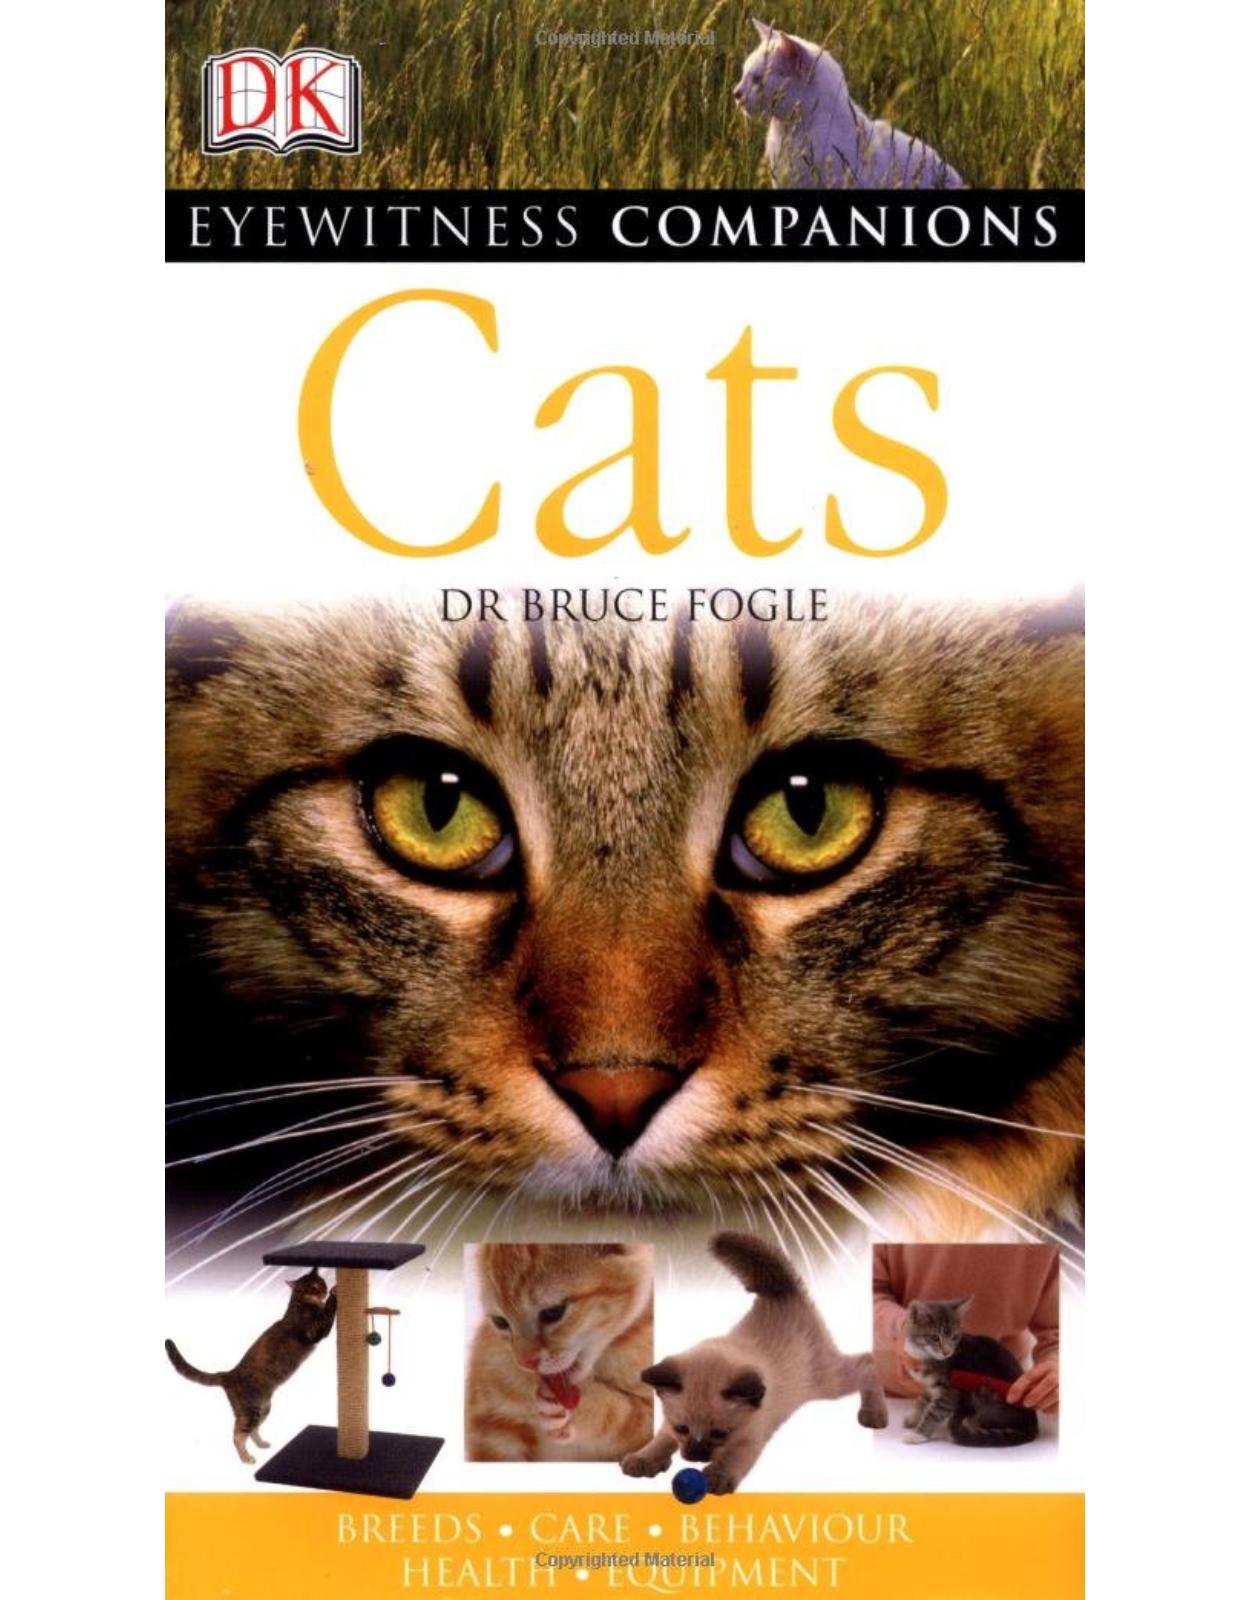 Eyewitness Companions: Cats